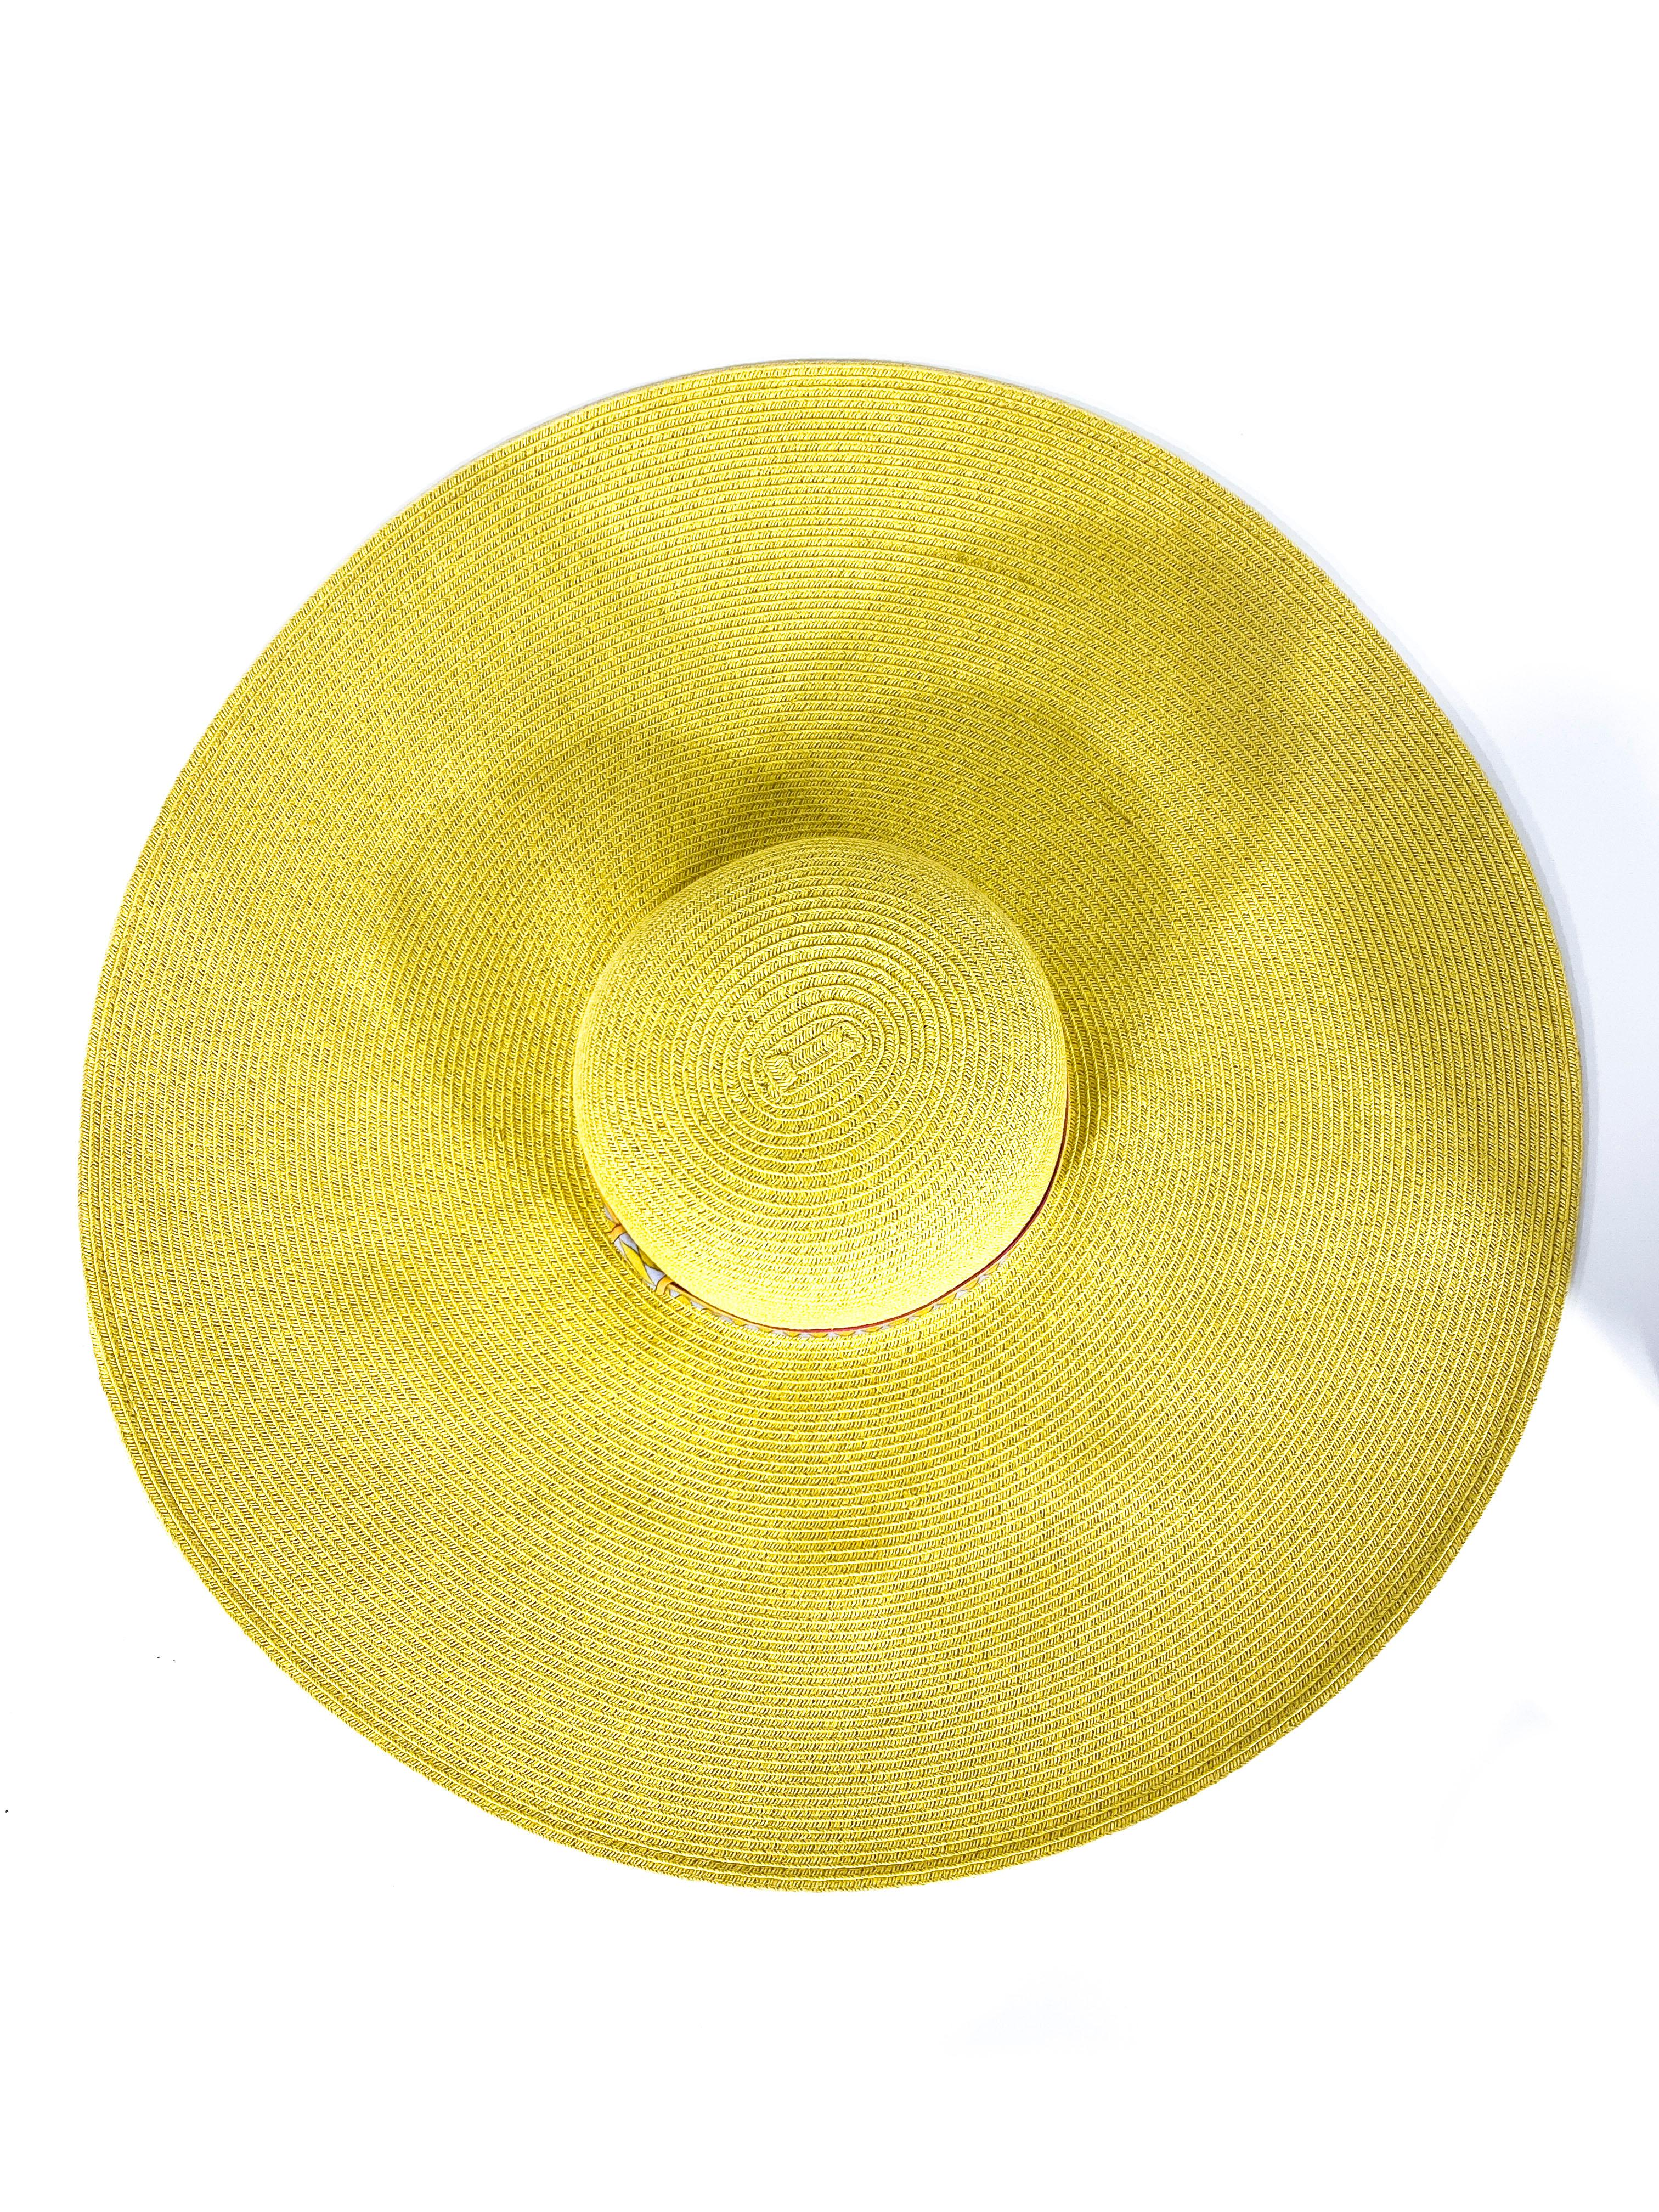 Women's or Men's 1980s Yellow Oversized Sunhat with Custom Hat Band